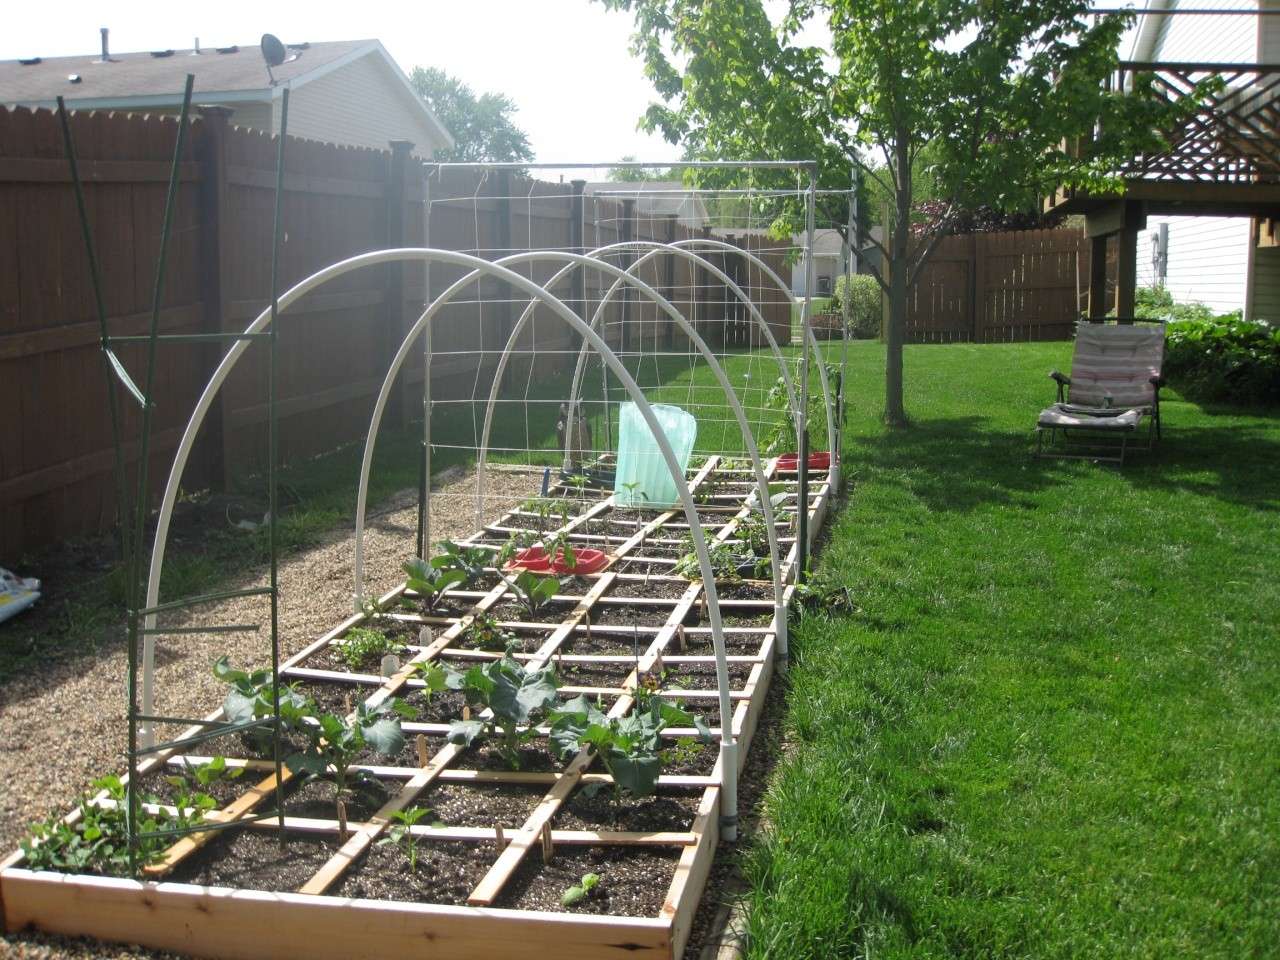 strawberries - My transformed row garden to a beautiful SFG Img_4515